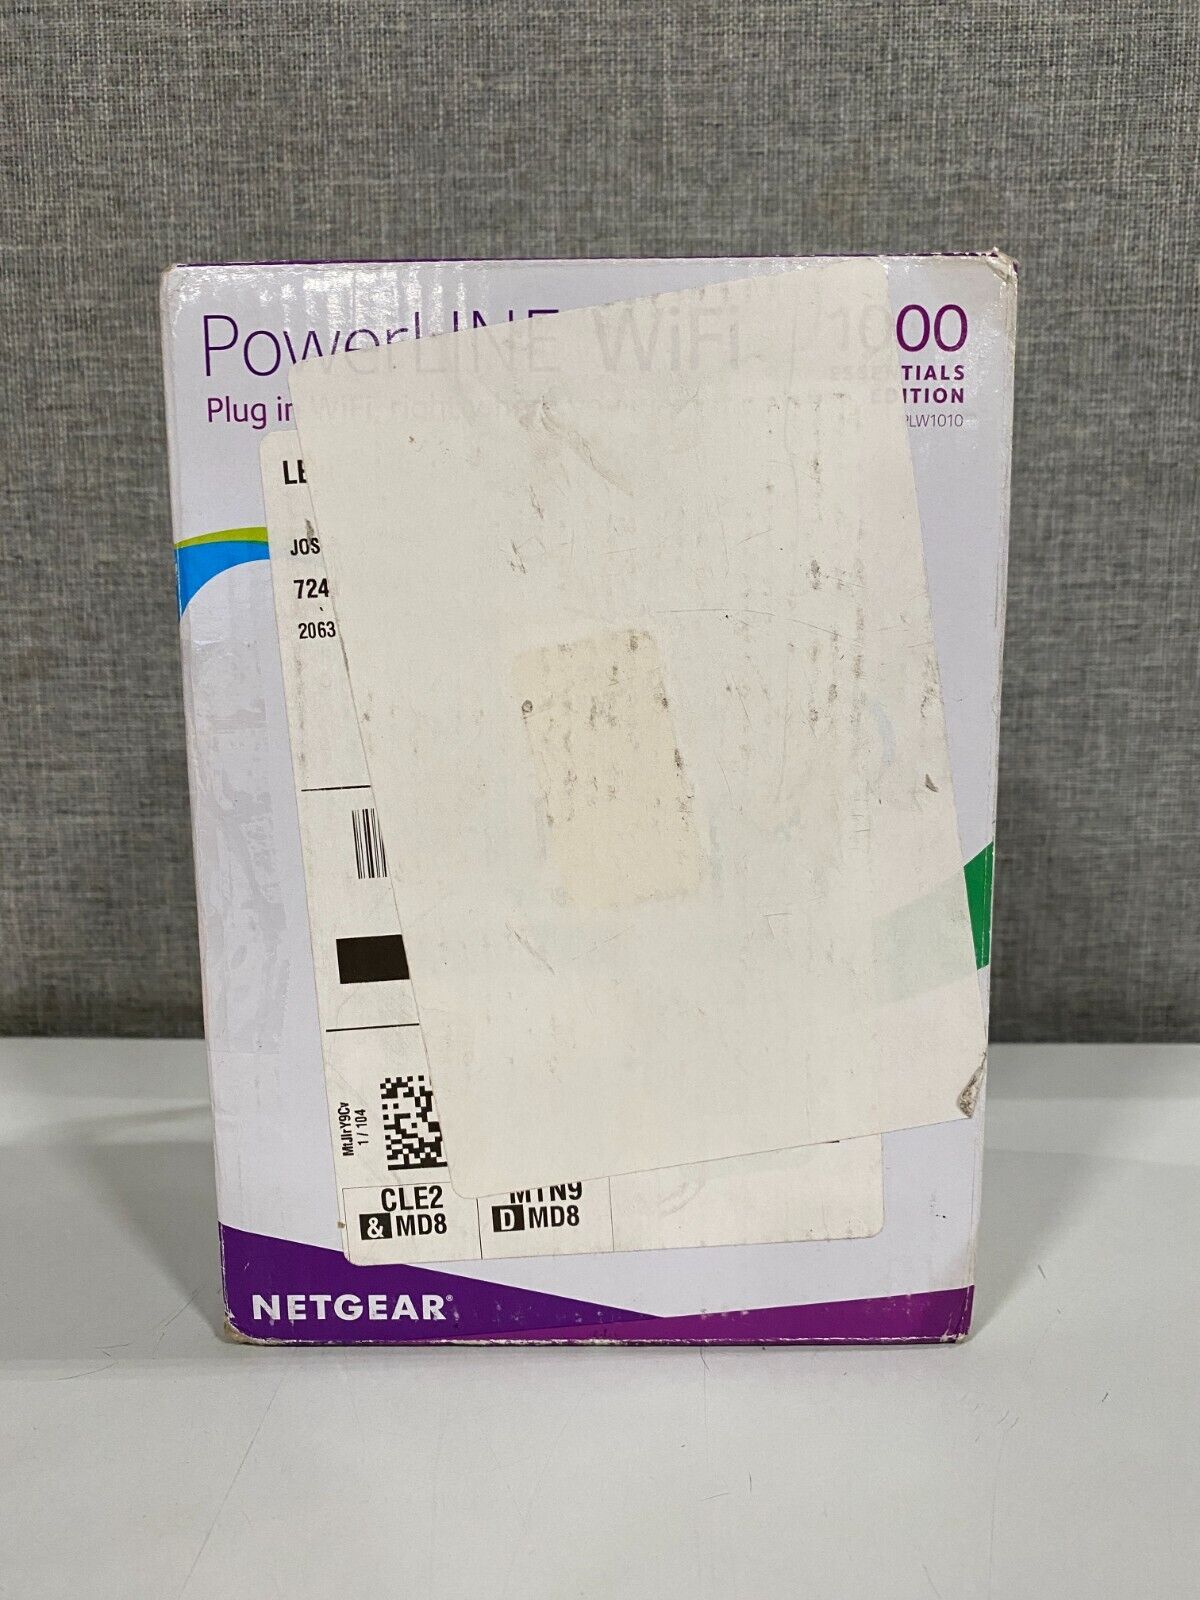 NETGEAR PowerLINE 1000 Mbps WiFi, 802.11ac, 1 Gigabit Port - Essentials Edition